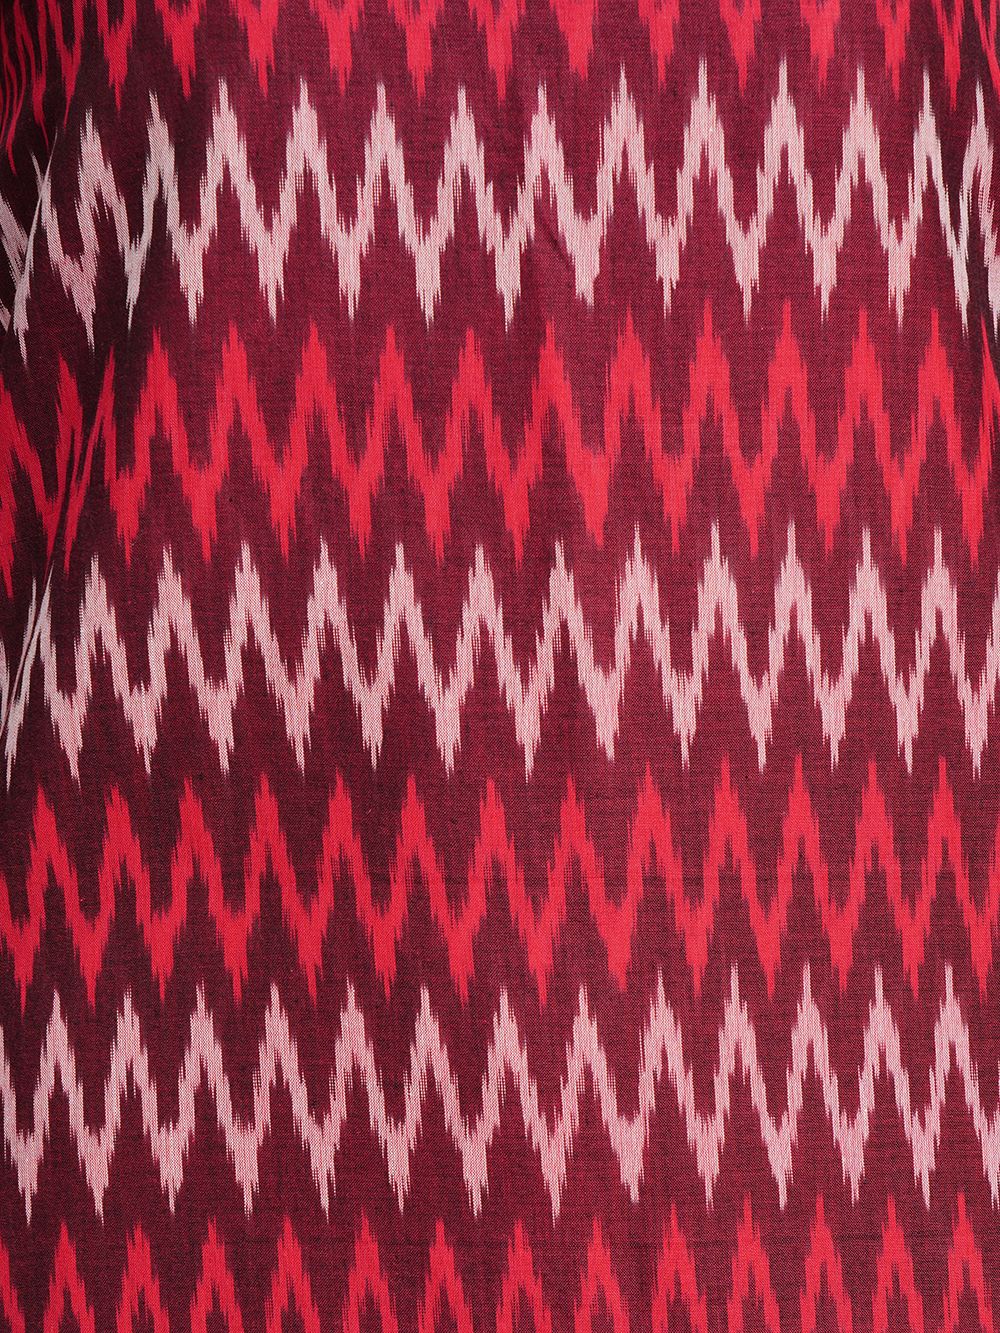 Maroon red Ikat mercerised  Cotton Fabric with Dupatta  (Set Of 2)